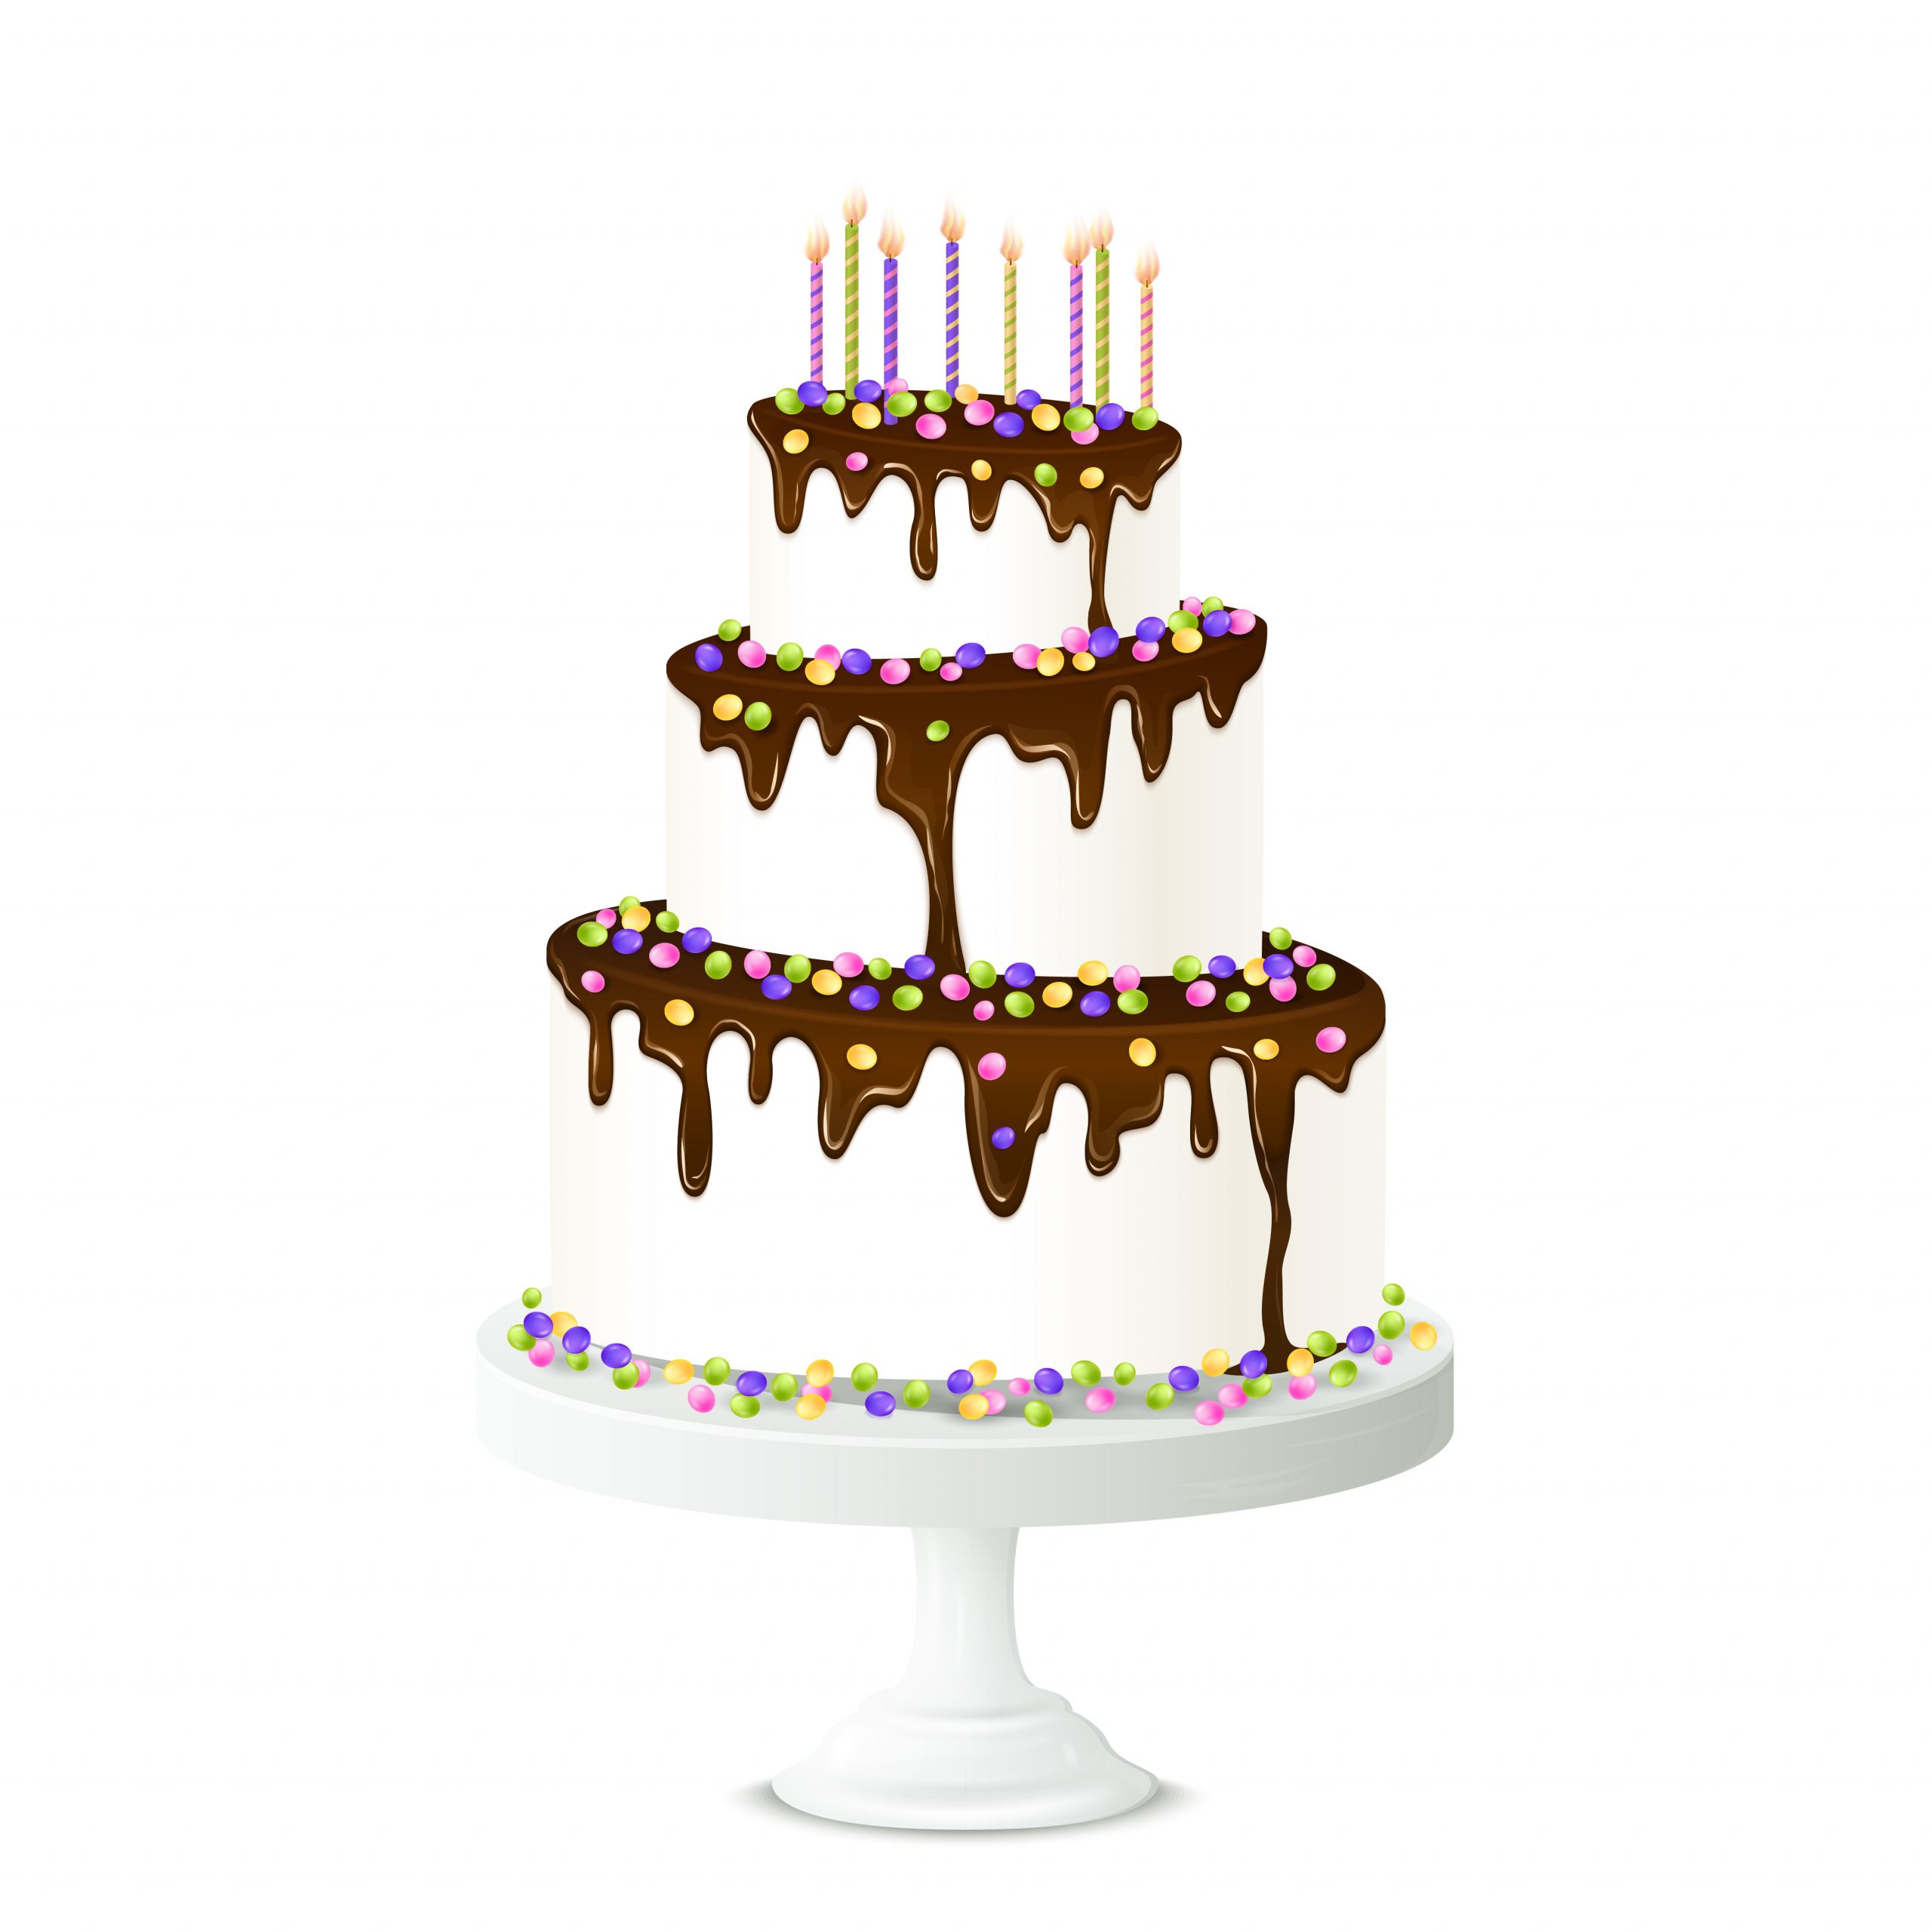 Birthday Cake Illustration
 Birthday Cake Illustration Download Free Vectors